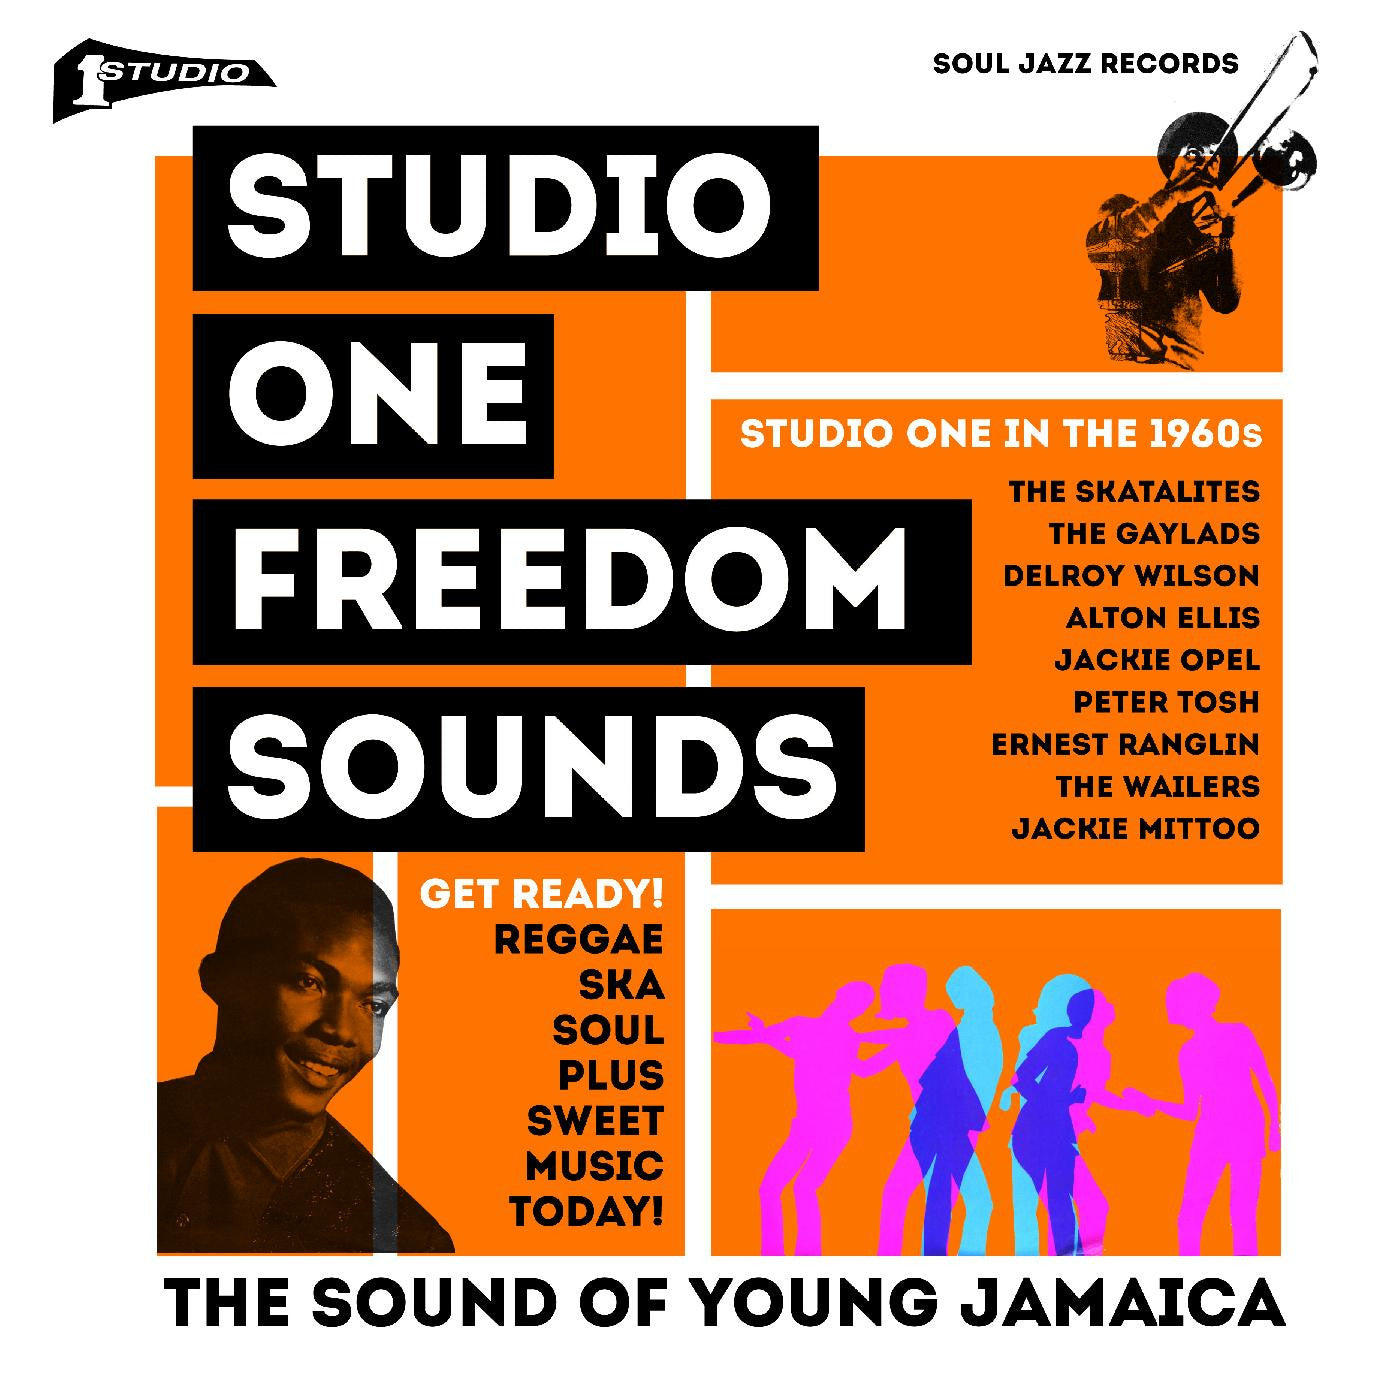 VARIOUS ARTISTS: STUDIO ONE FREEDOM SOUNDS Vinyl 2xLP